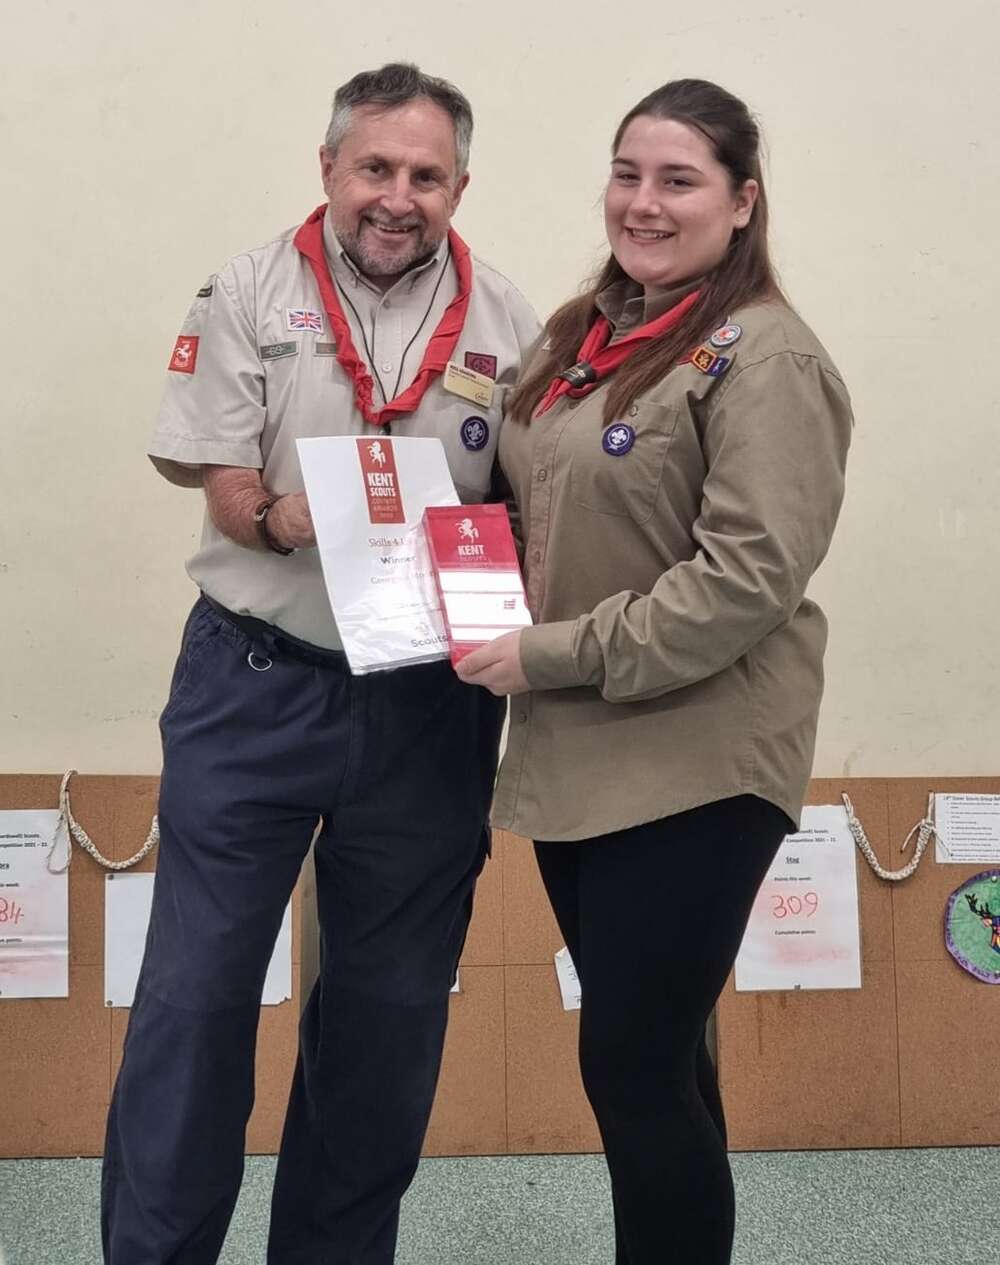 Georgina an Explorer in Dover gains The Skills for Lfe Award.